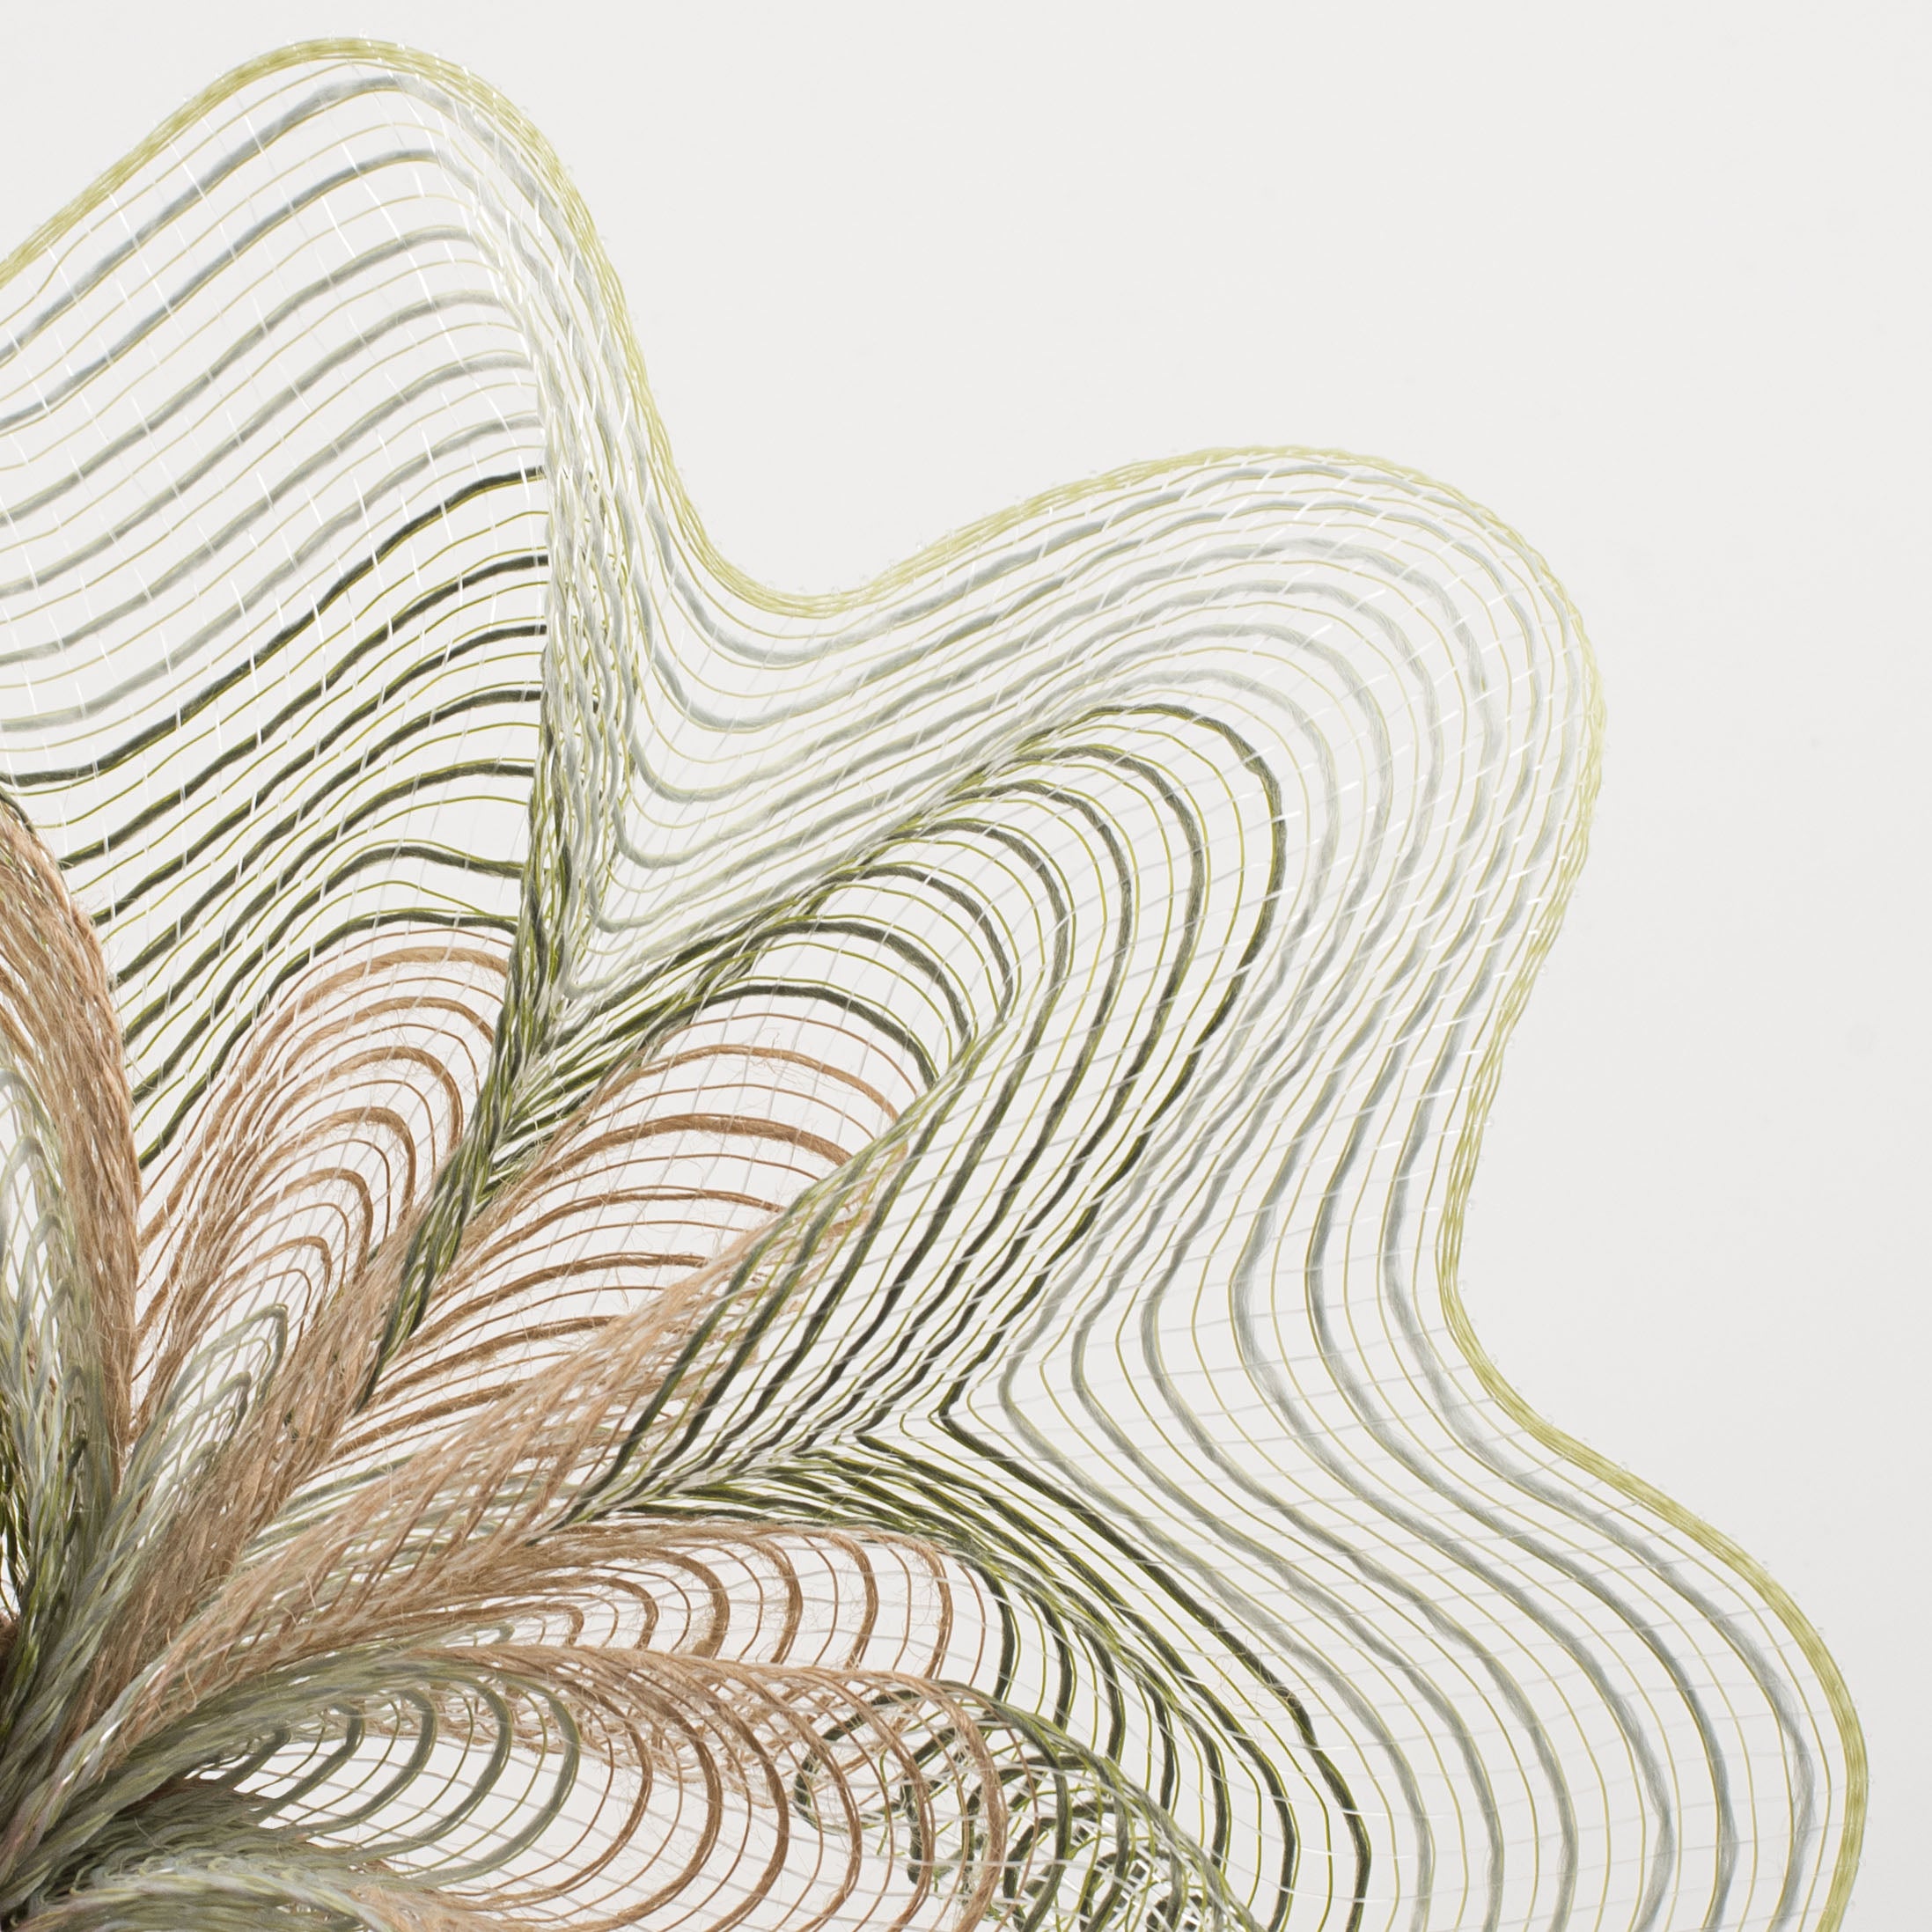 10" Burlap Deco Mesh: Moss, Sage & Natural Jute Stripes